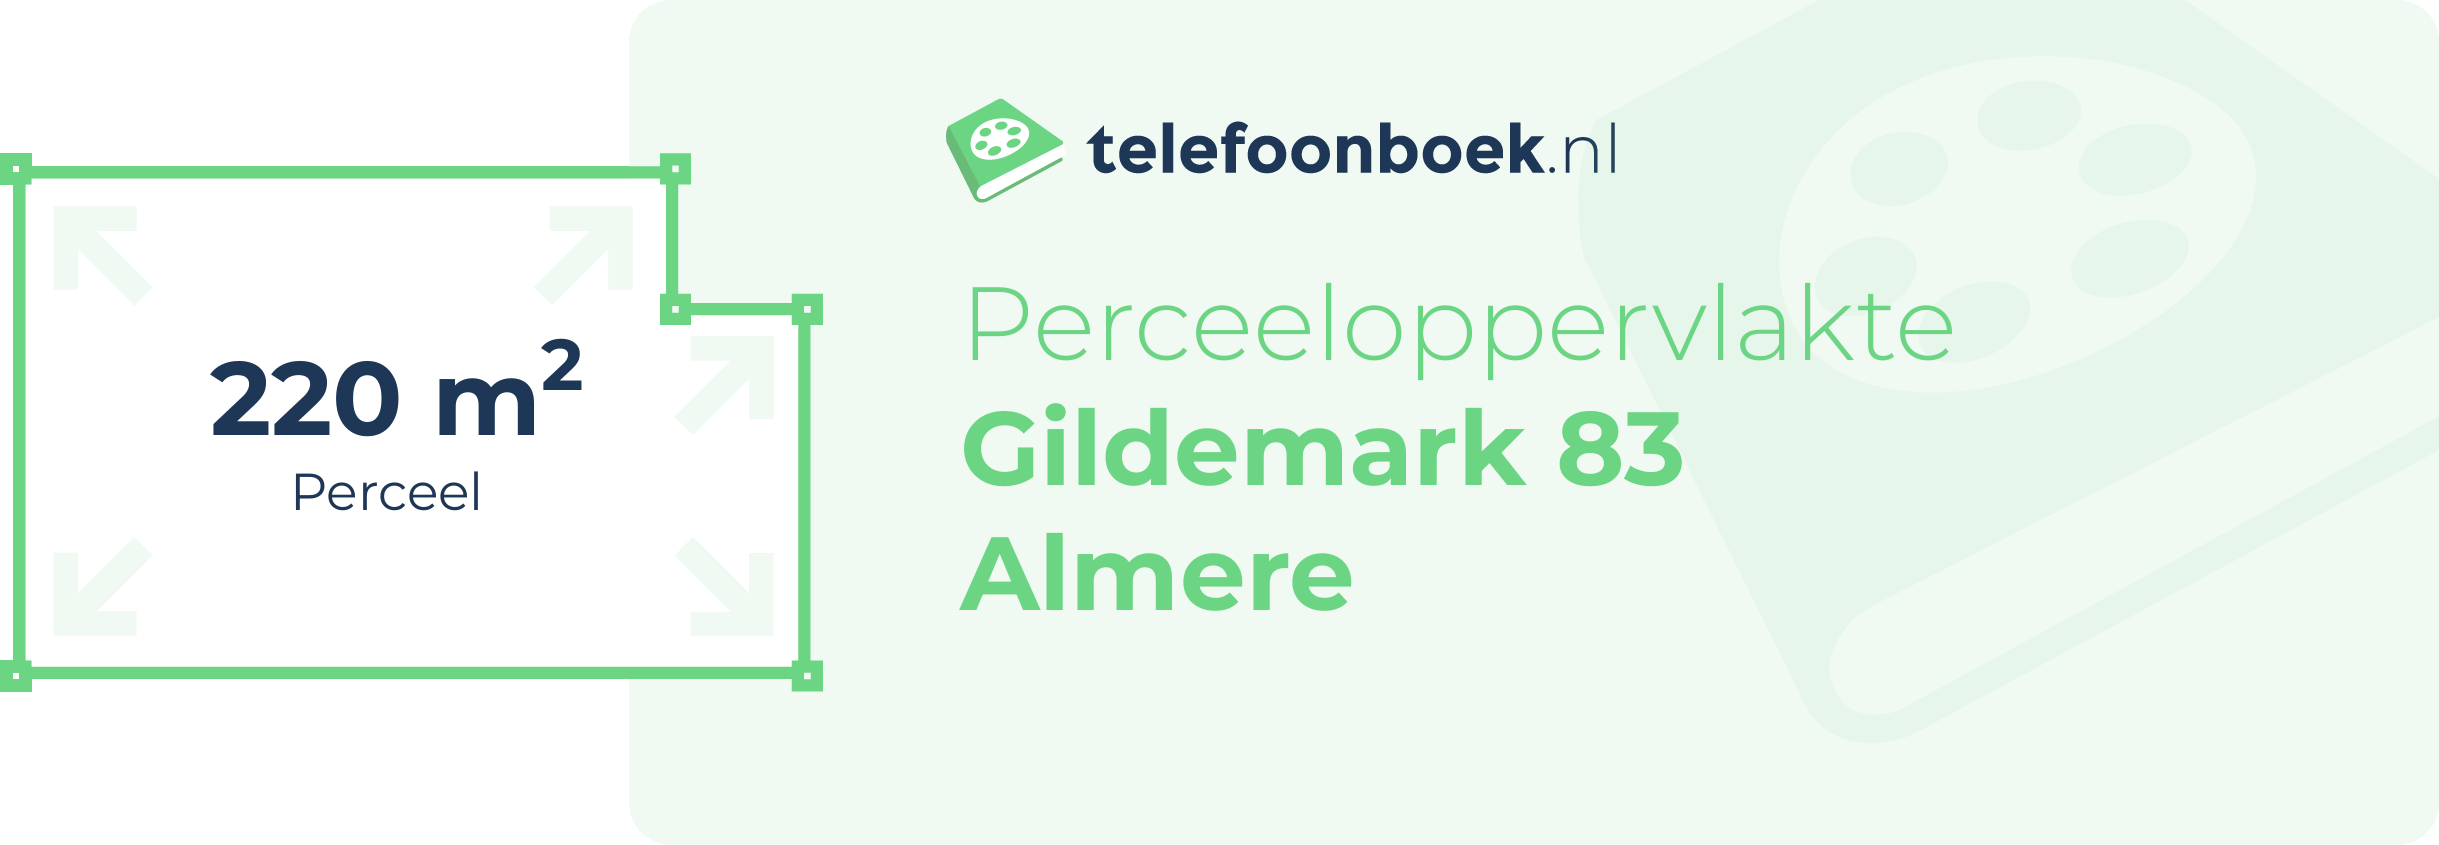 Perceeloppervlakte Gildemark 83 Almere